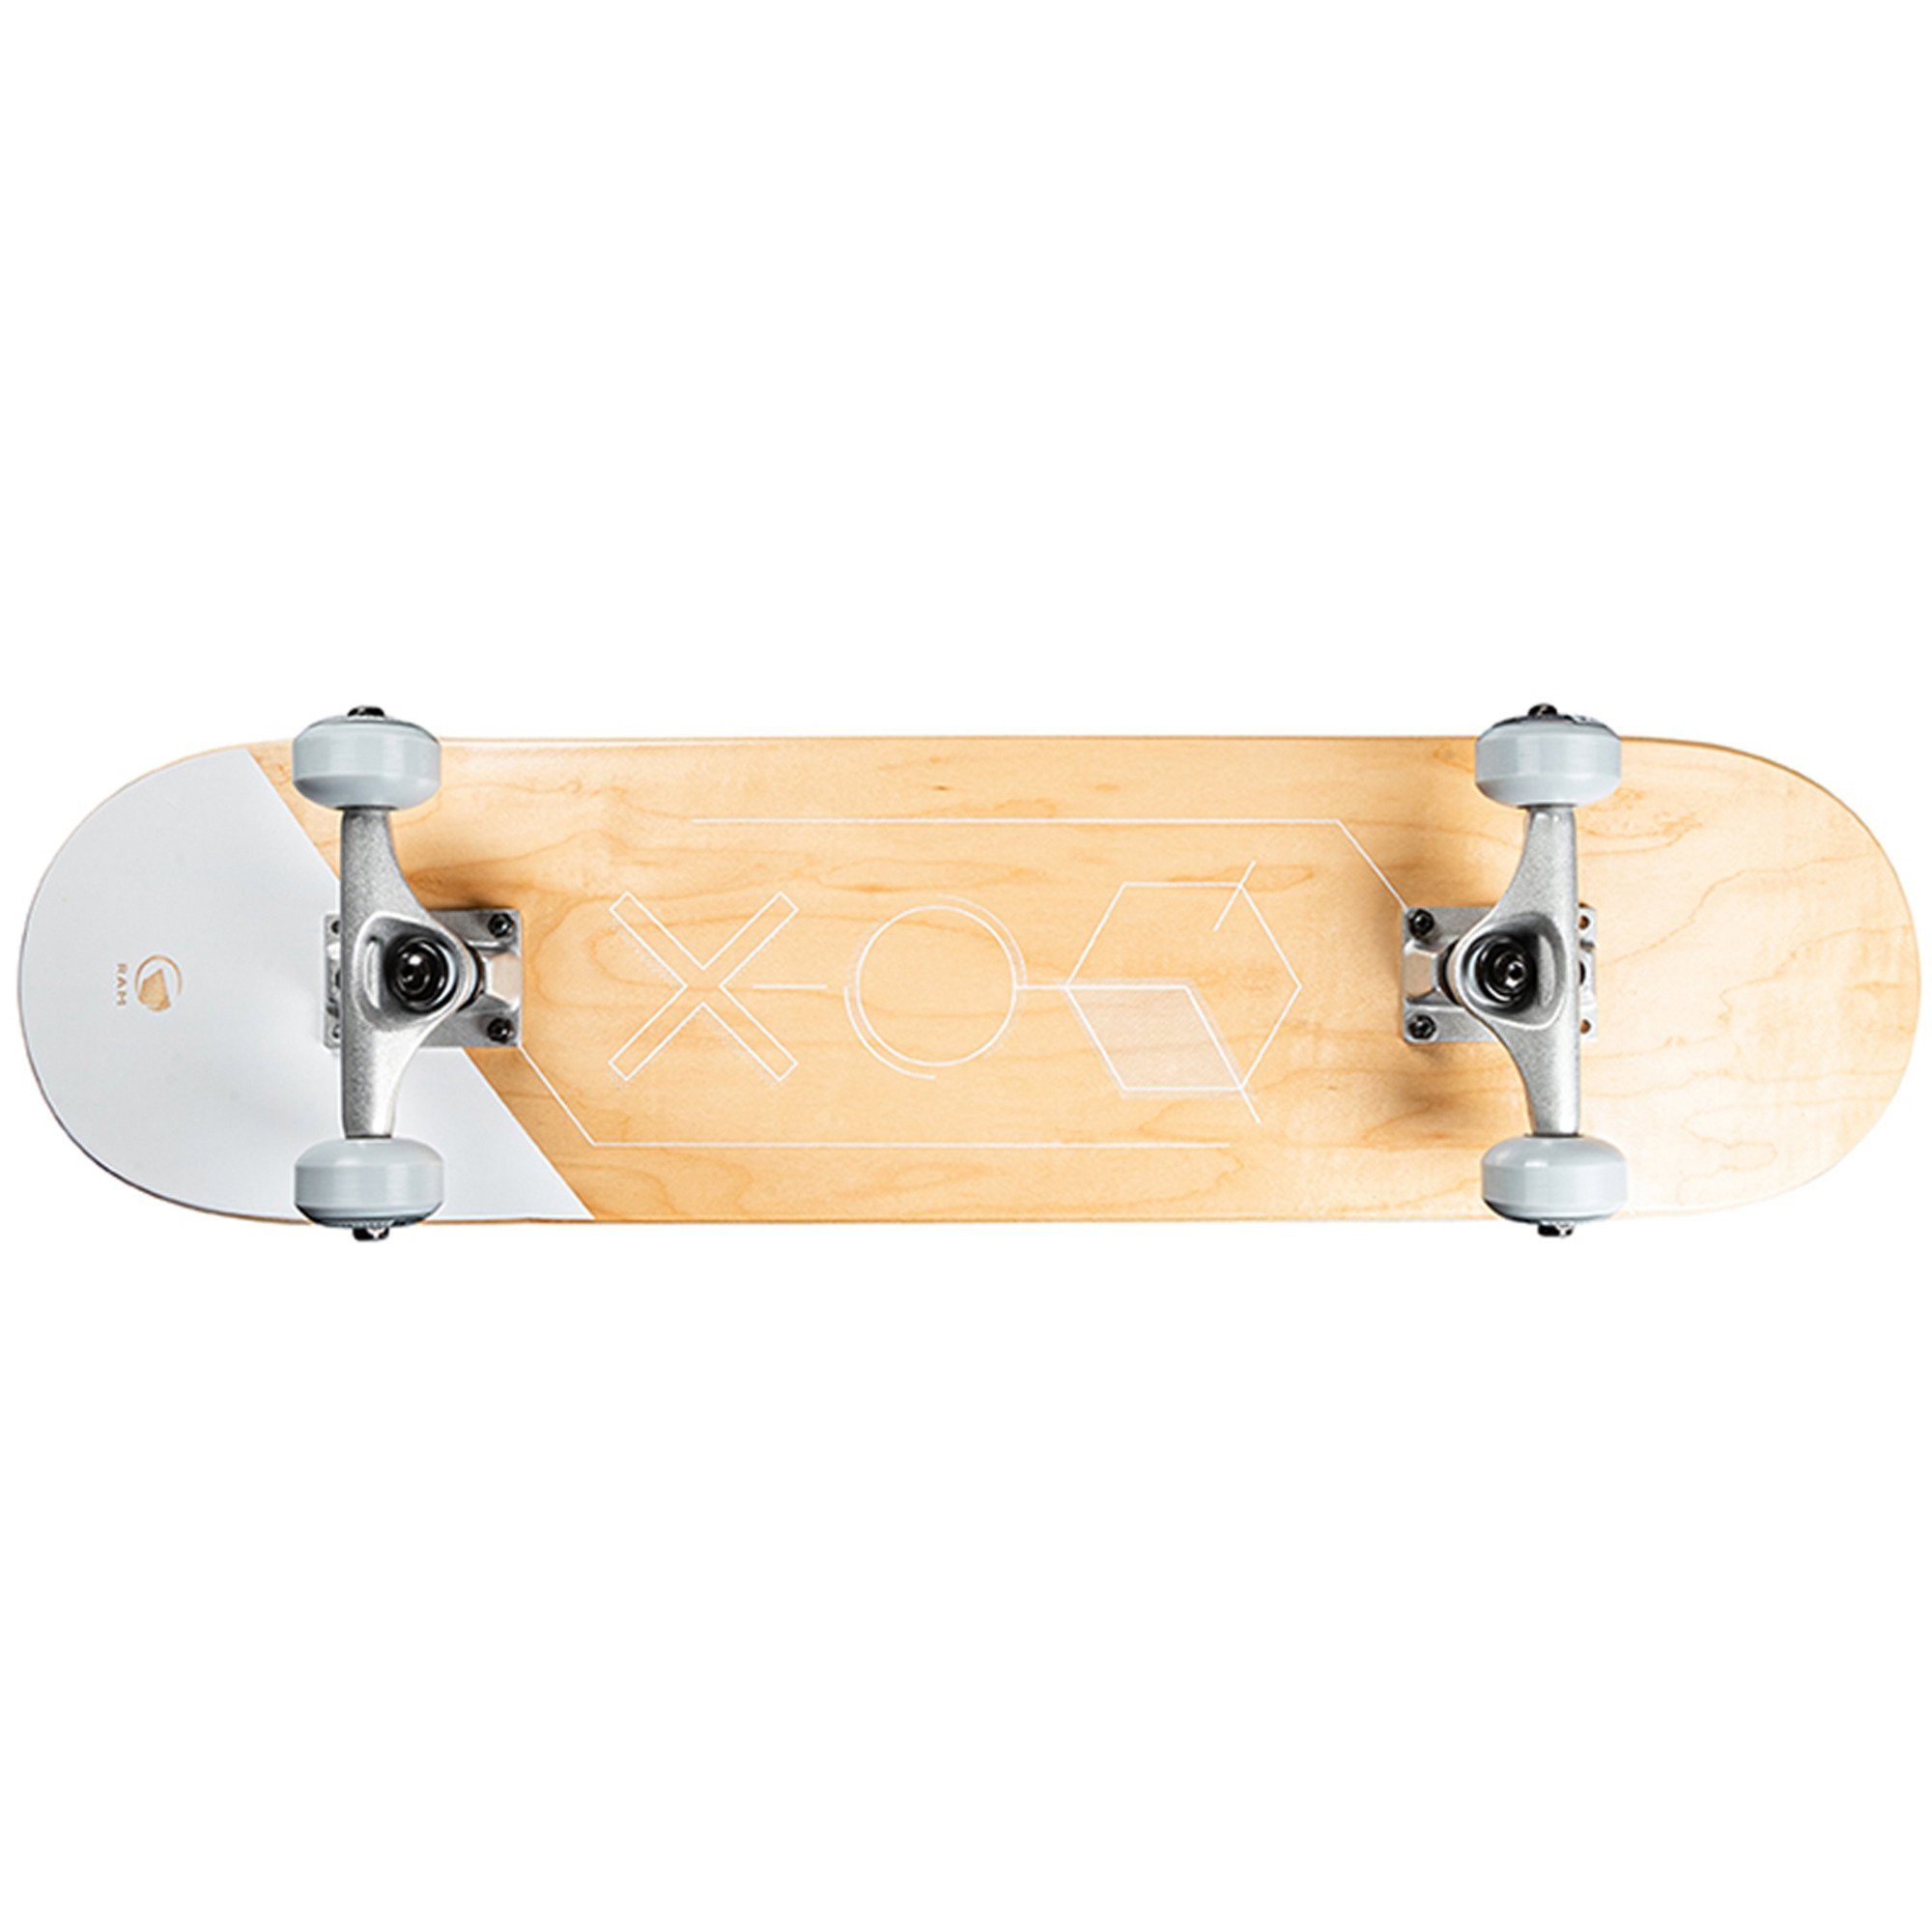 RAM ® Skateboard Skateboard Signo blanc de blanc